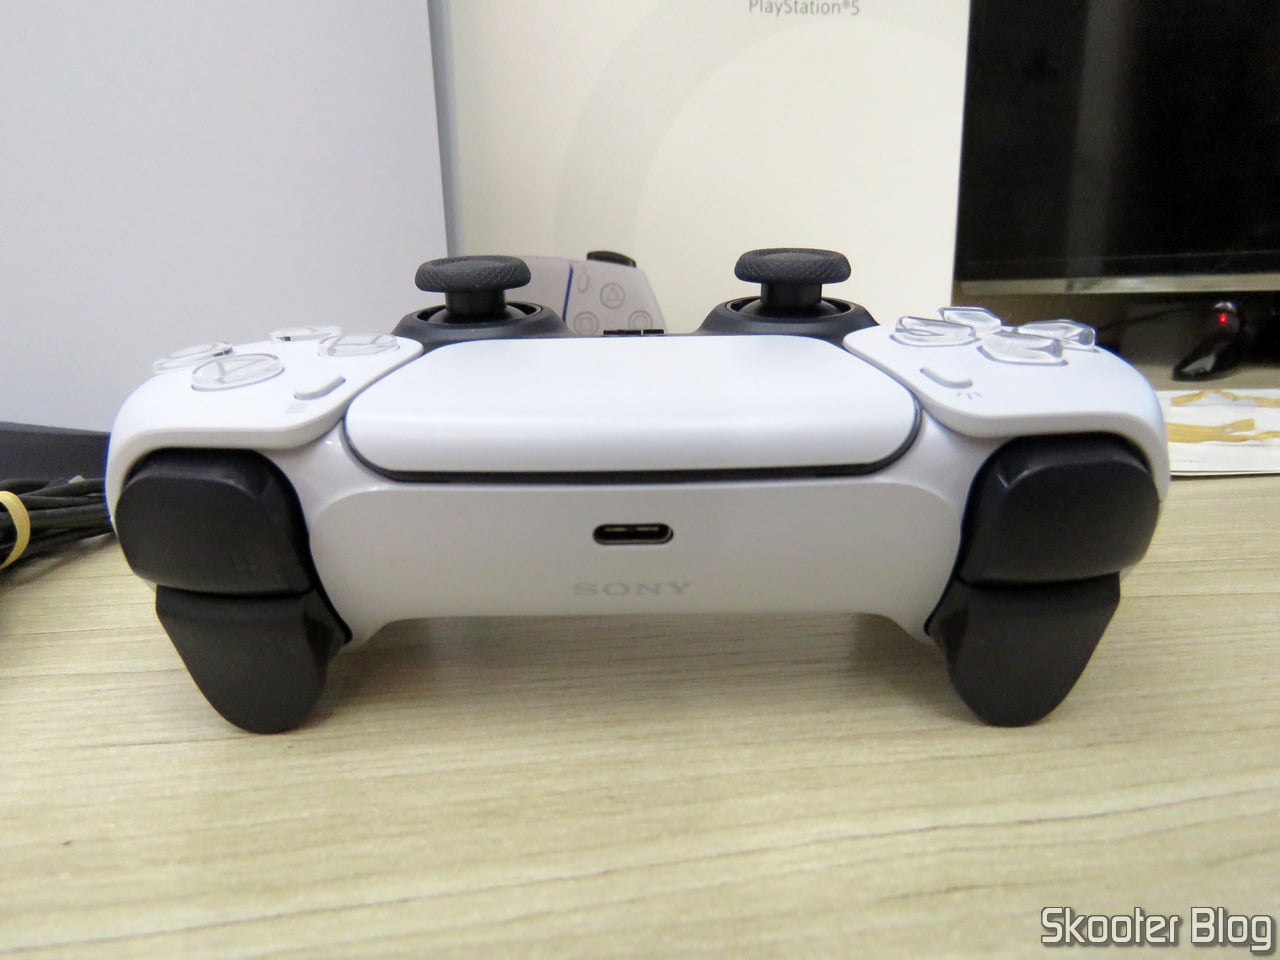 Arquivos de PlayStation 5 - Skooter Blog